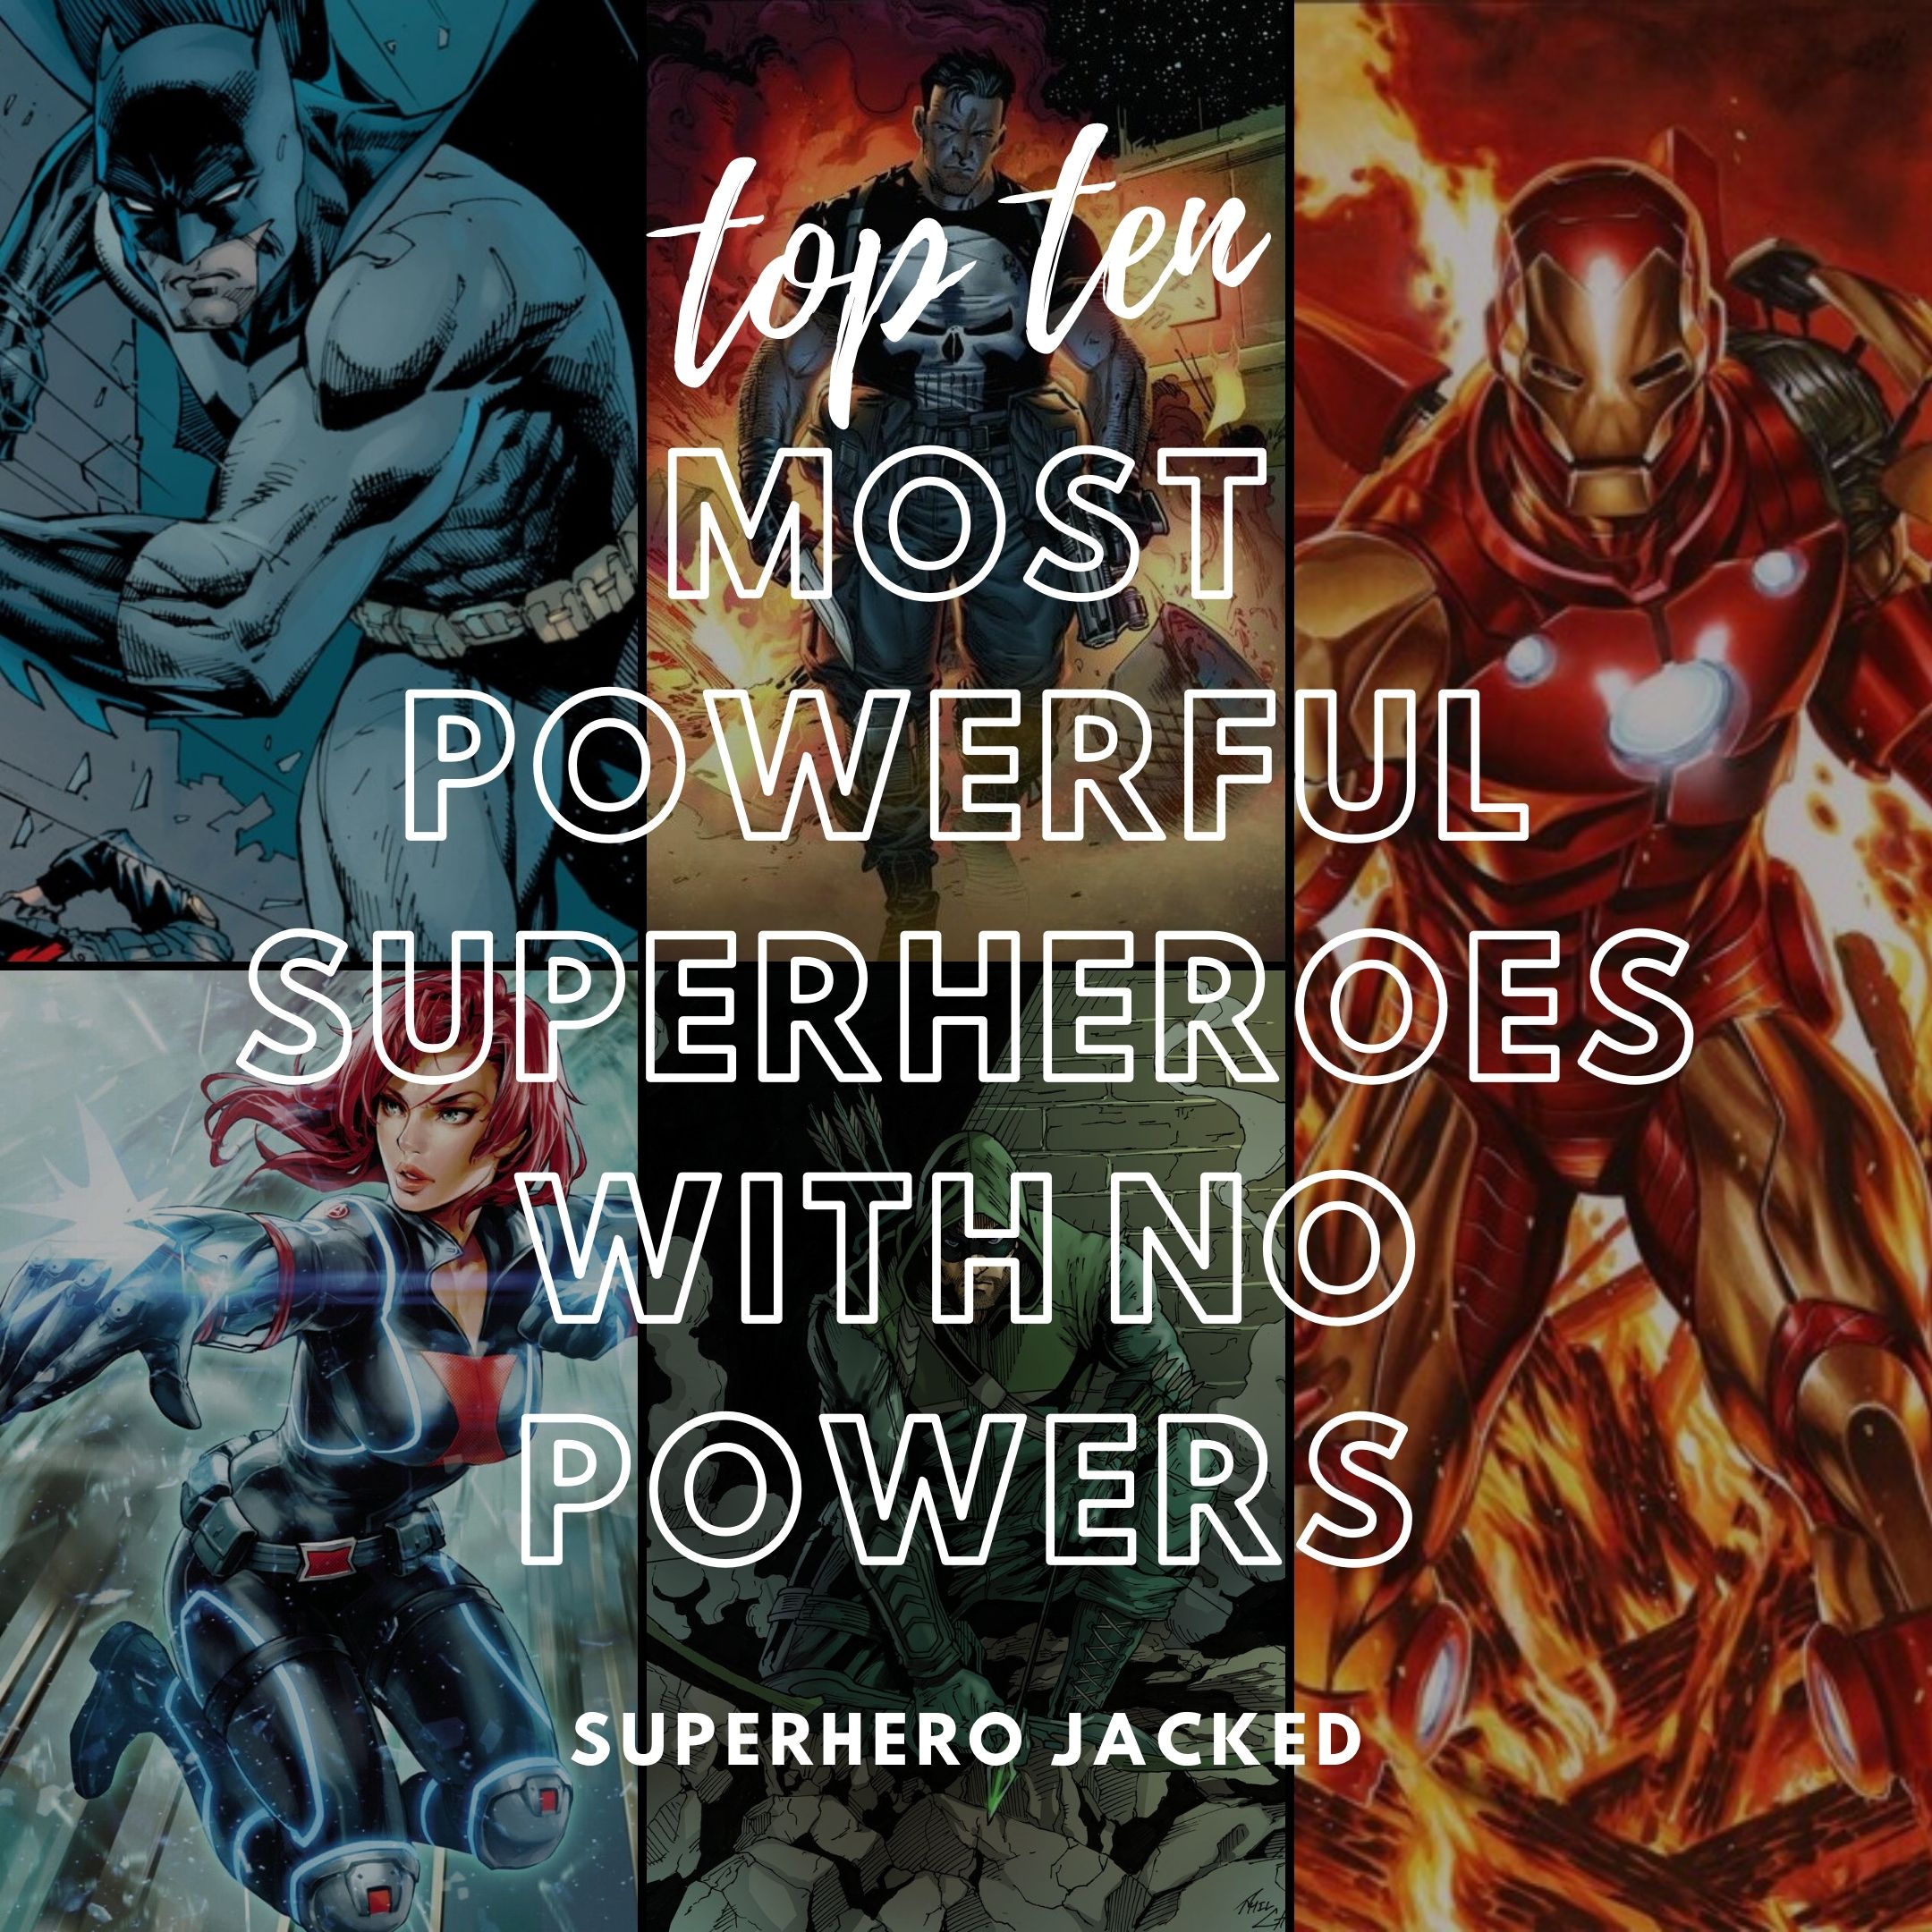 The SHJ Nutrition System – Superhero Jacked